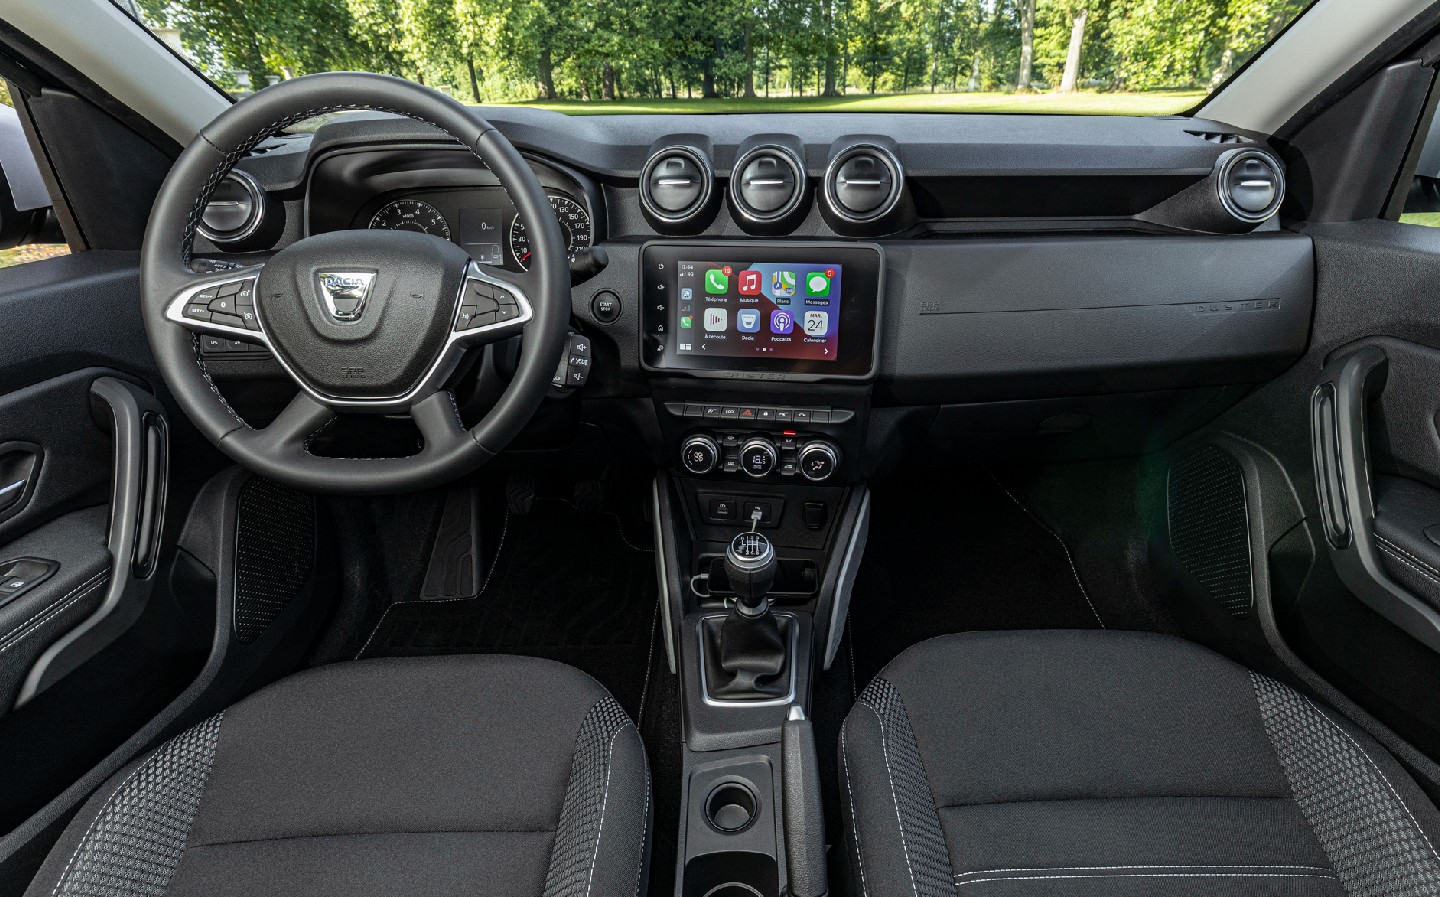 Interior - Dacia Duster 2021 review